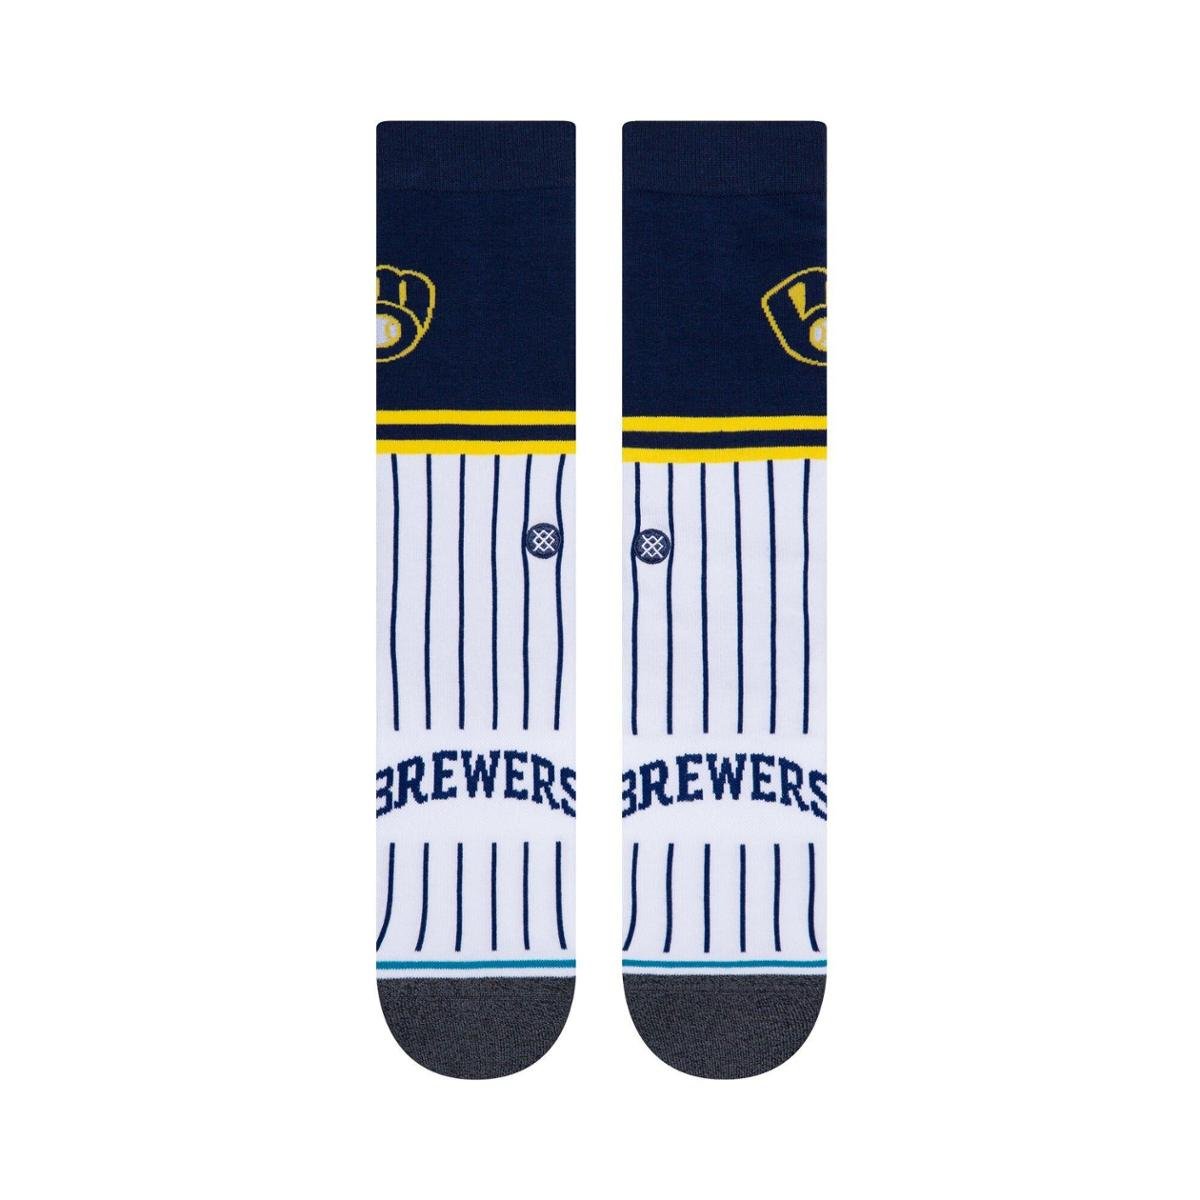 Meia Stance Milwaukee Brewers - Colors